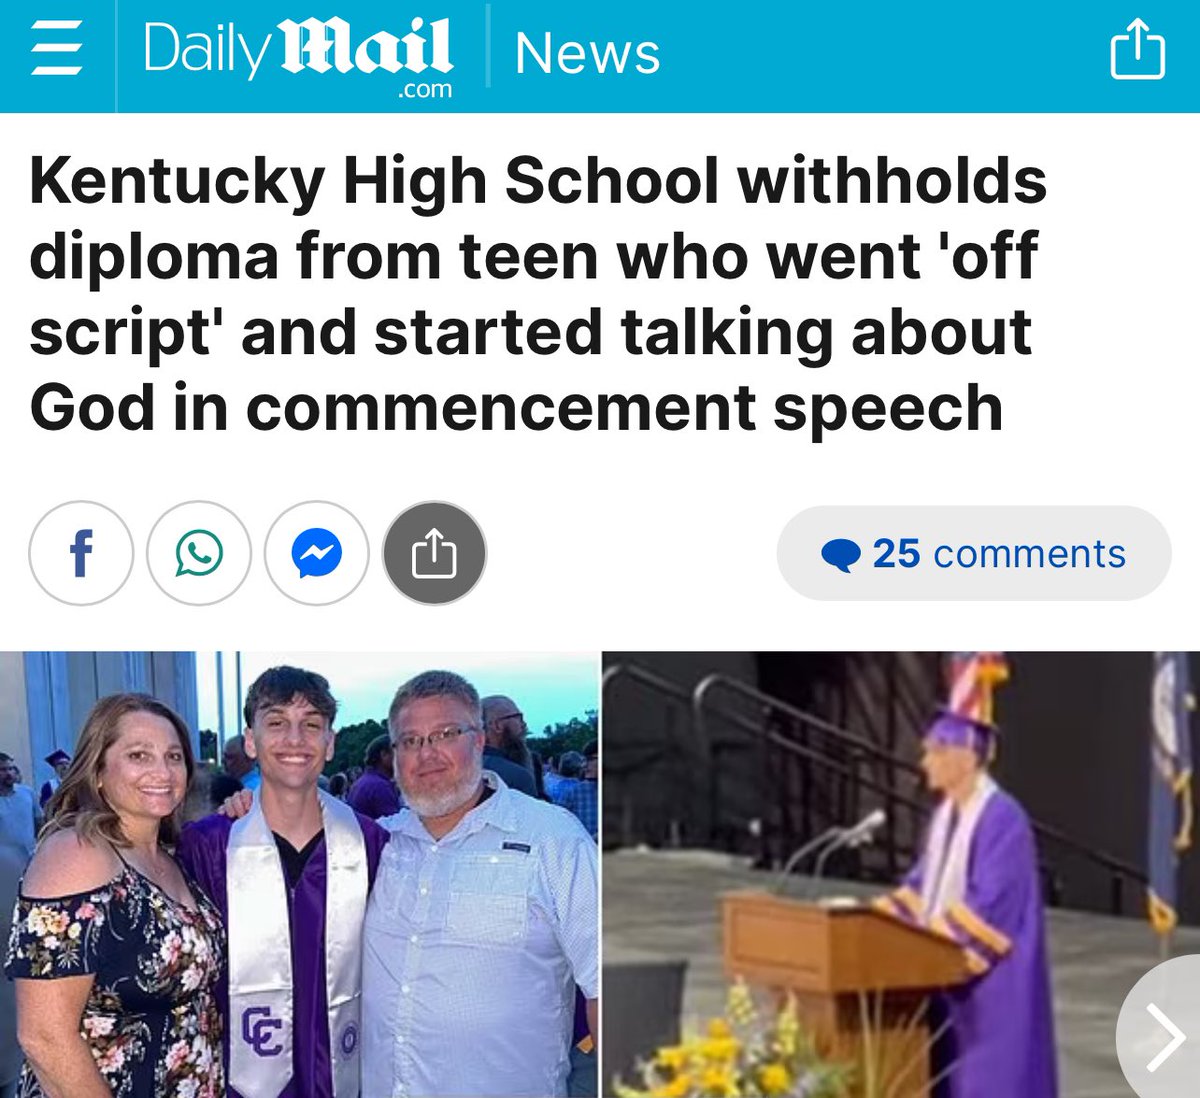 Kentucky High School silences student for mentioning God in his graduation speech. Free speech under attack?